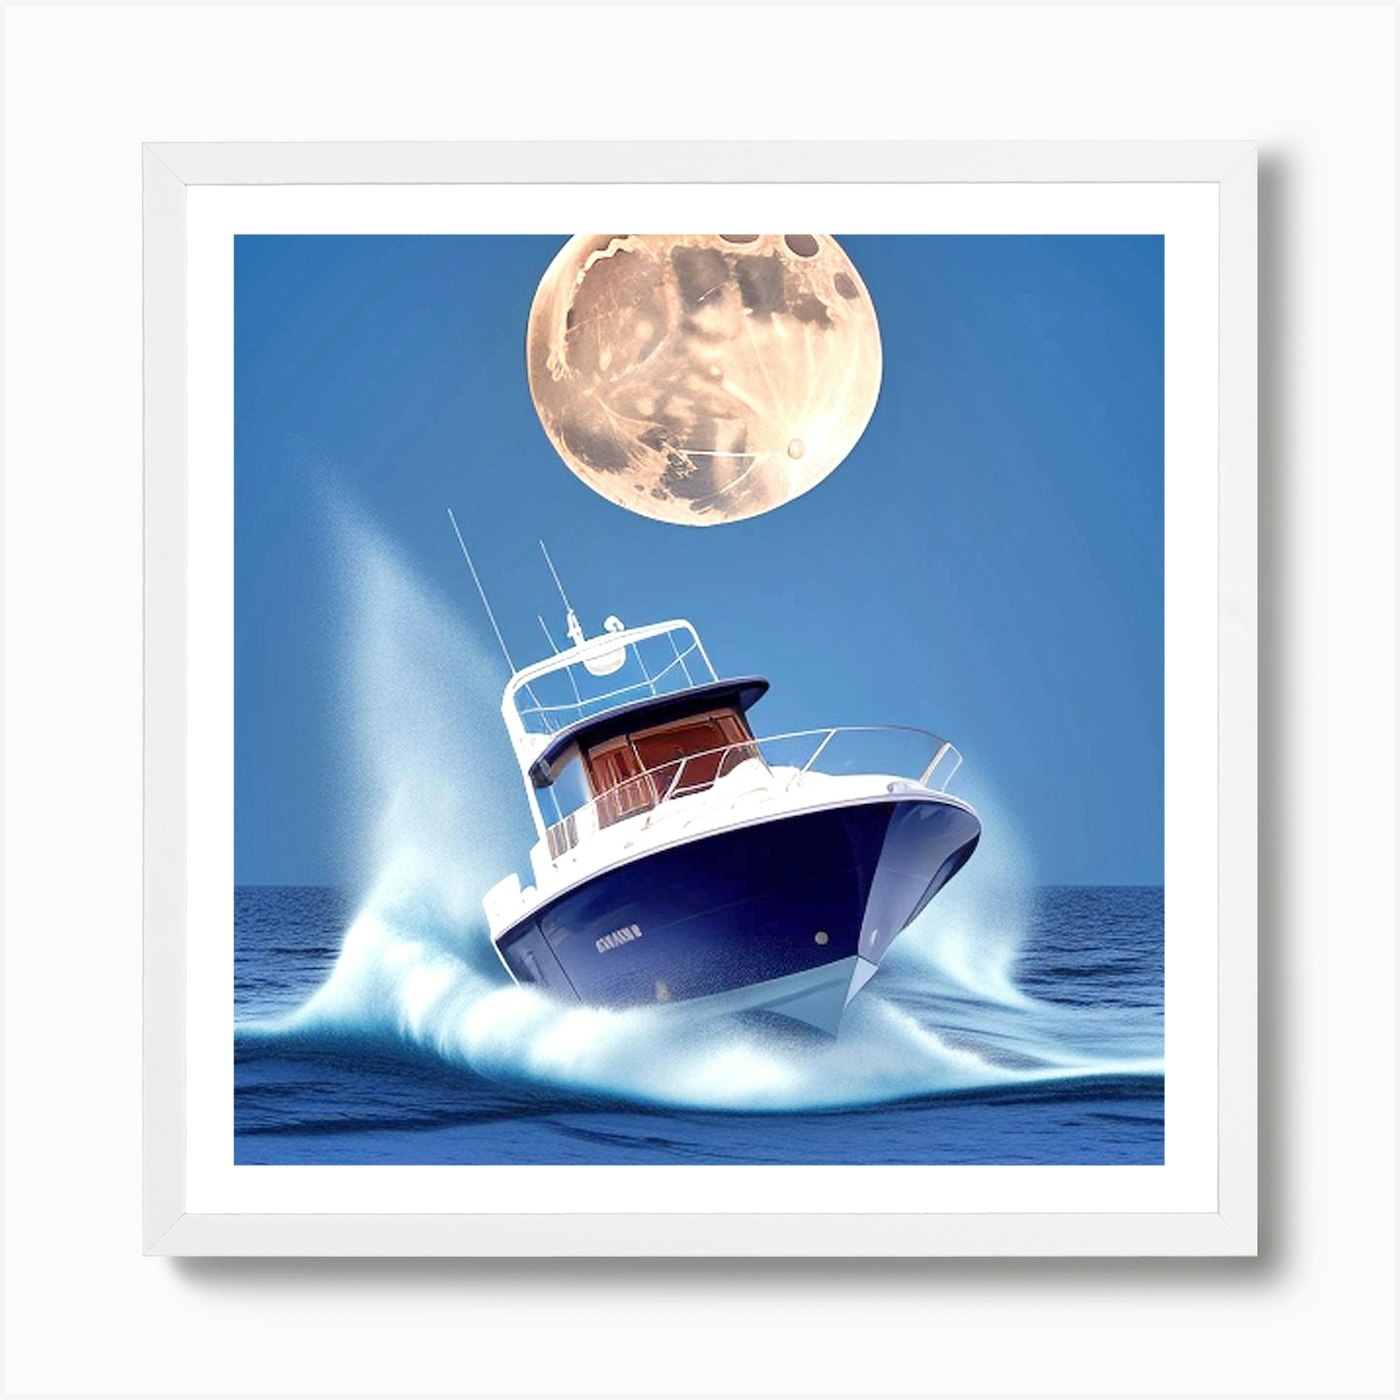 Boat In The Moonlight 7 Art Print by MdsArts - Fy